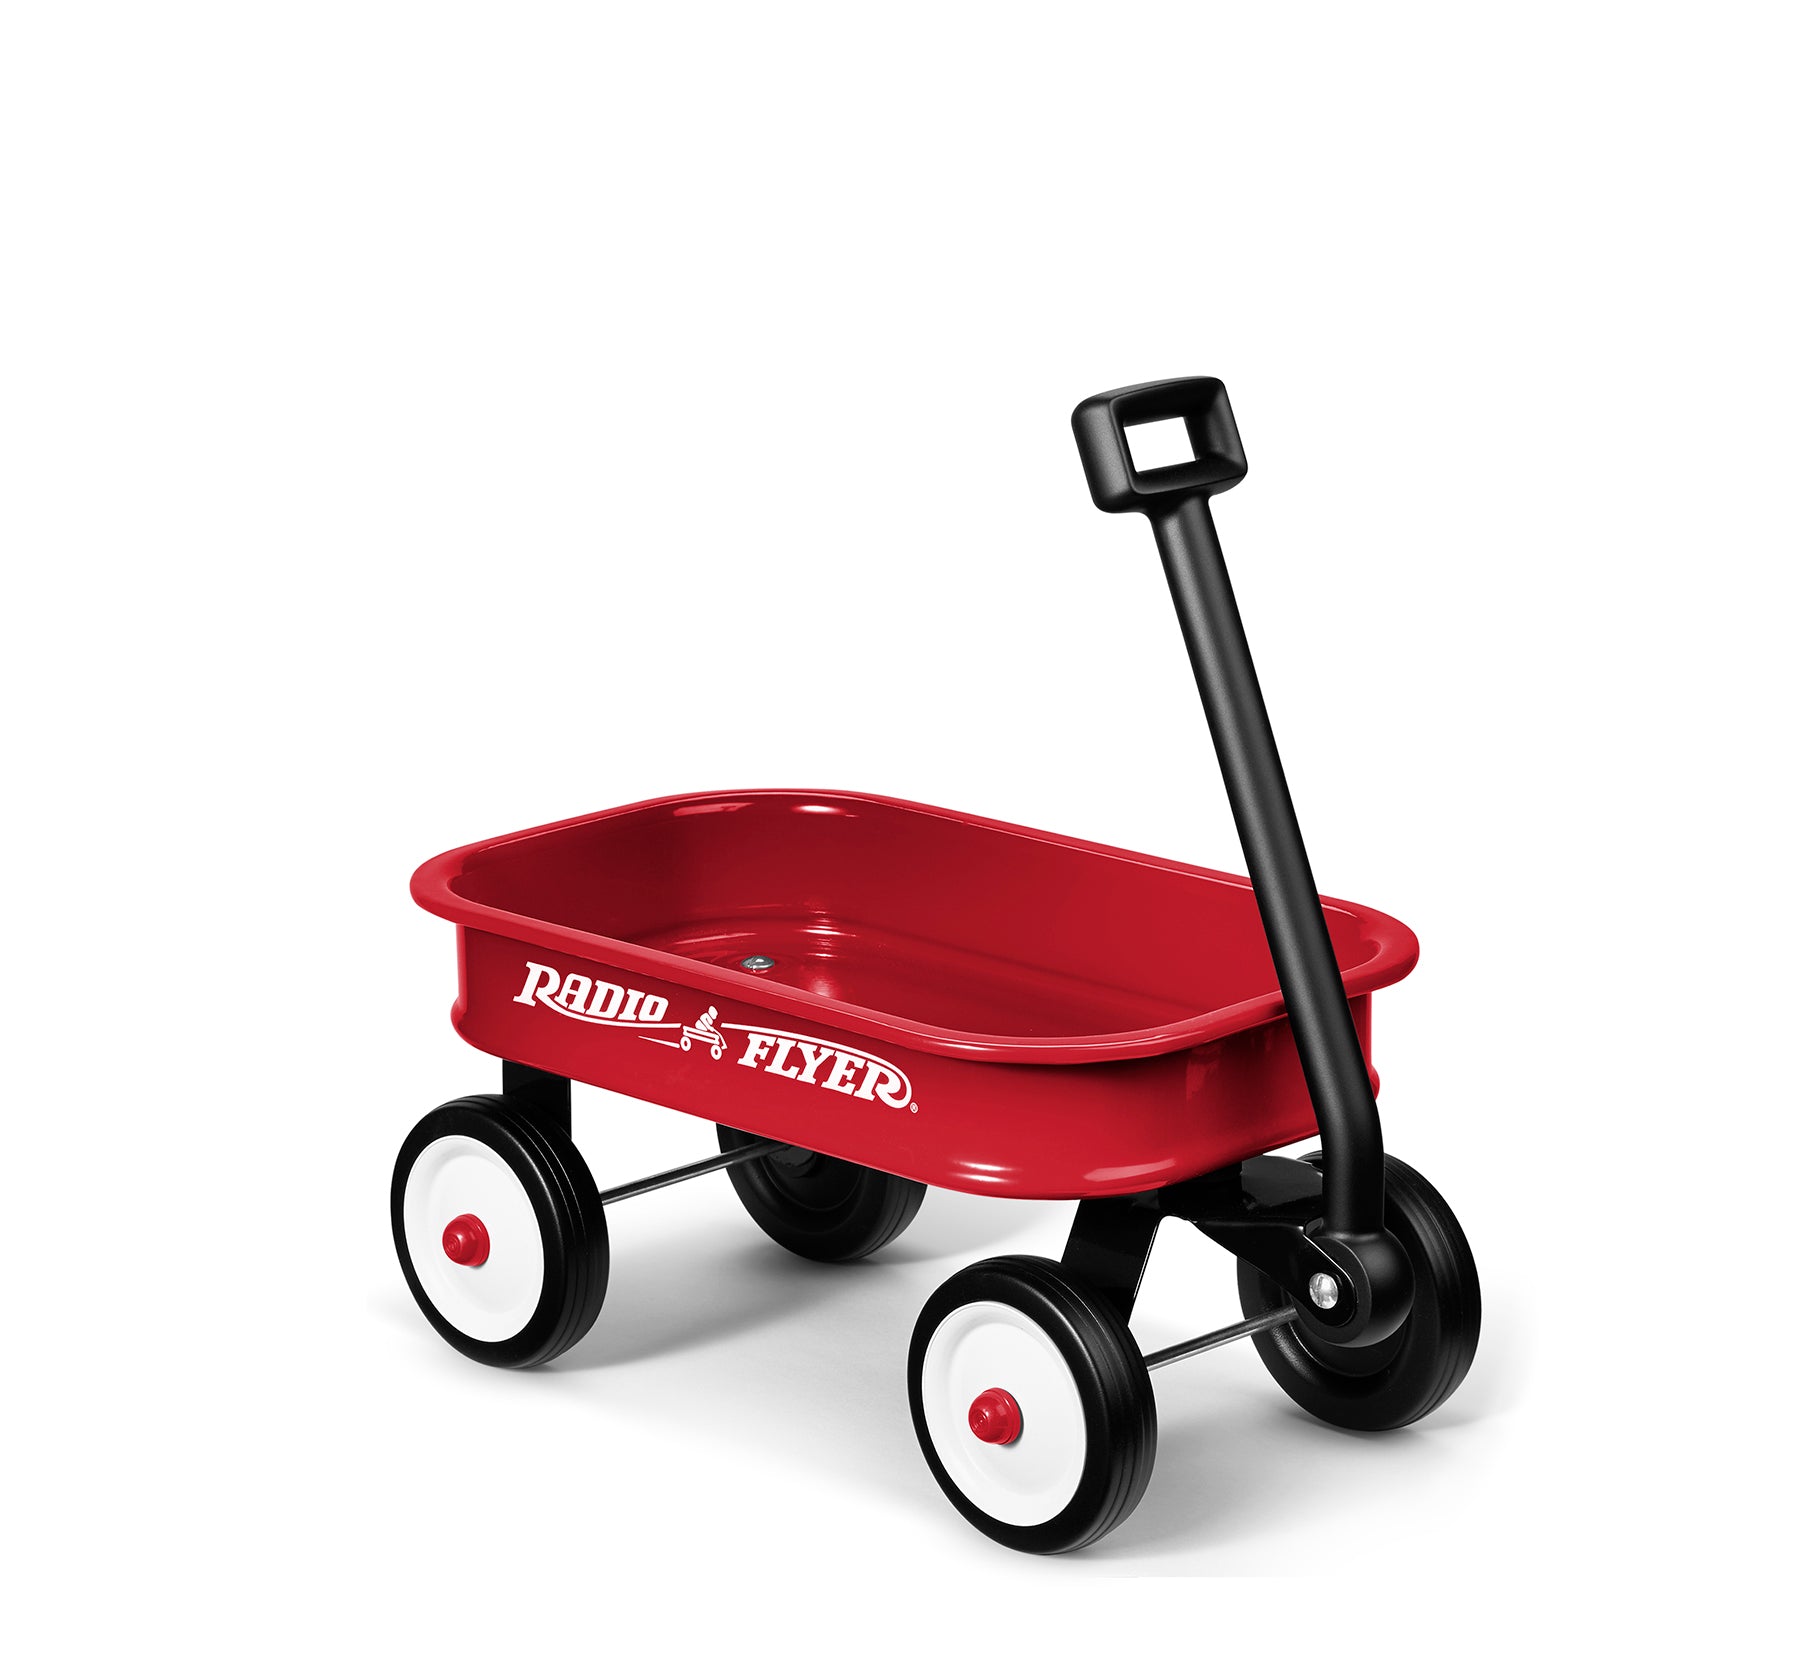 Little Red Toy Wagon – Radio Flyer